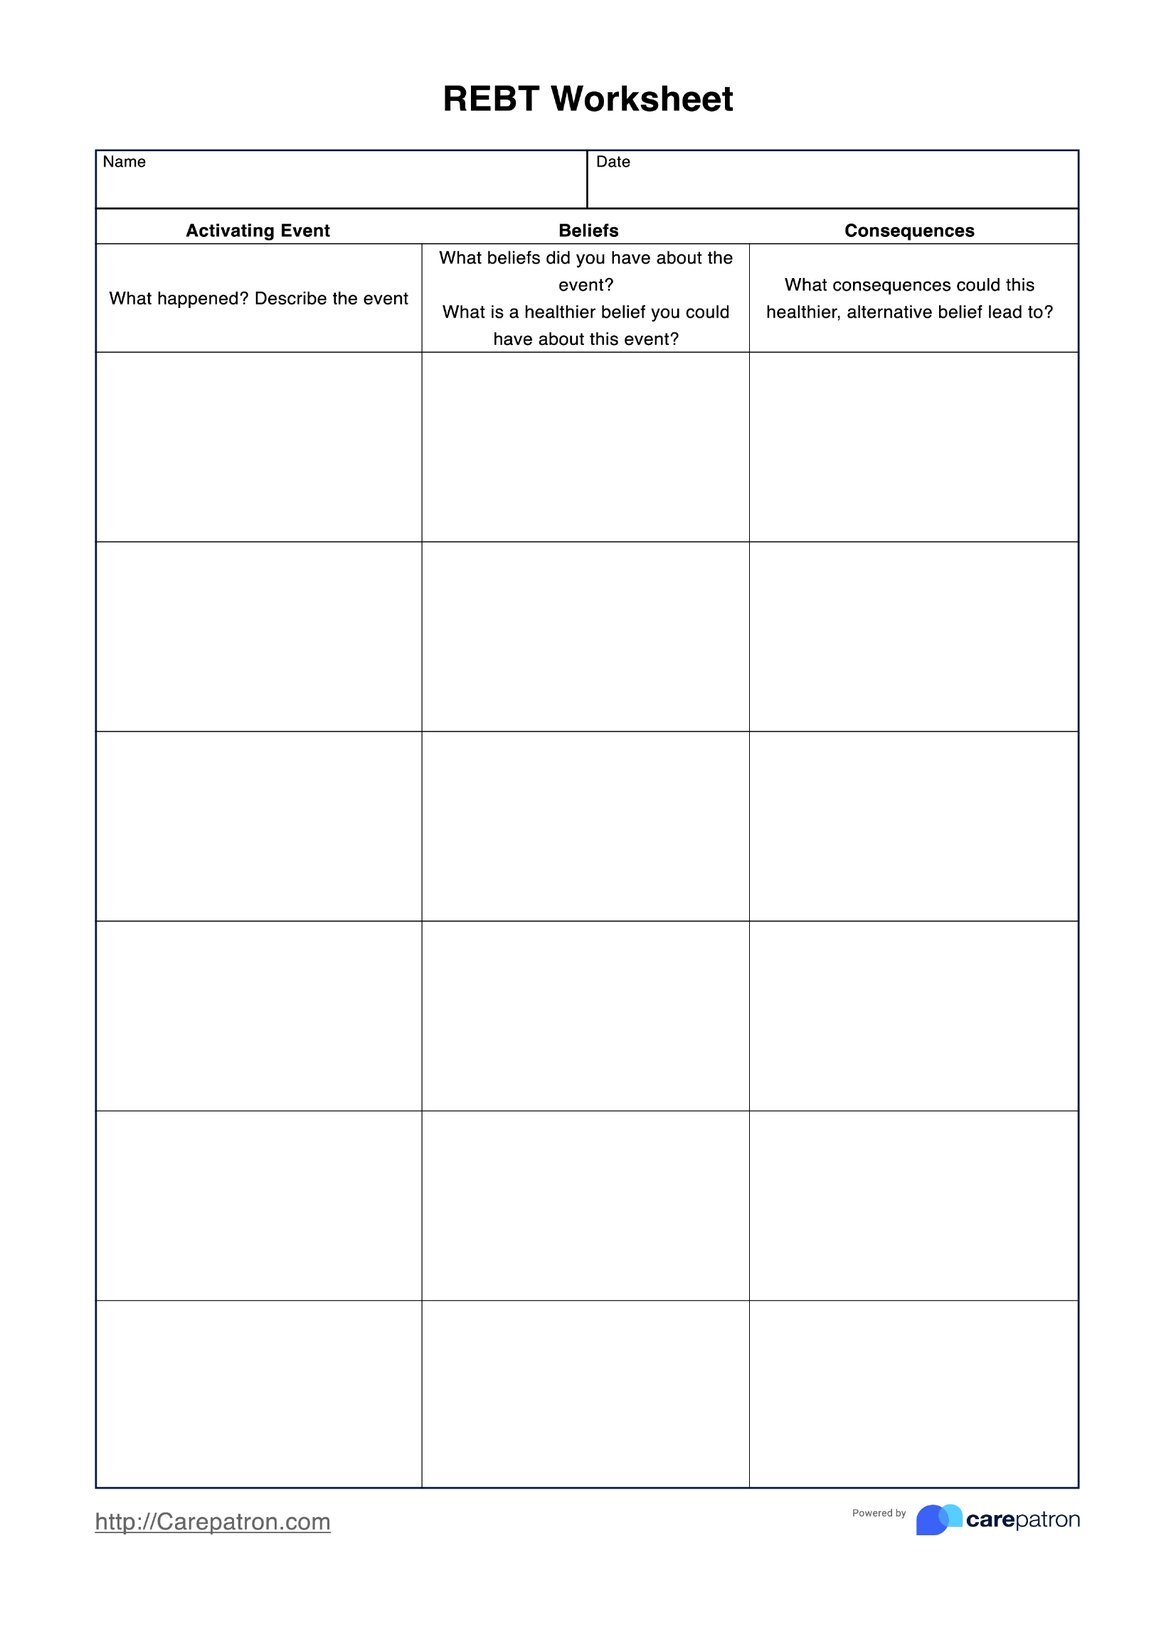 REBT Worksheets PDF Example